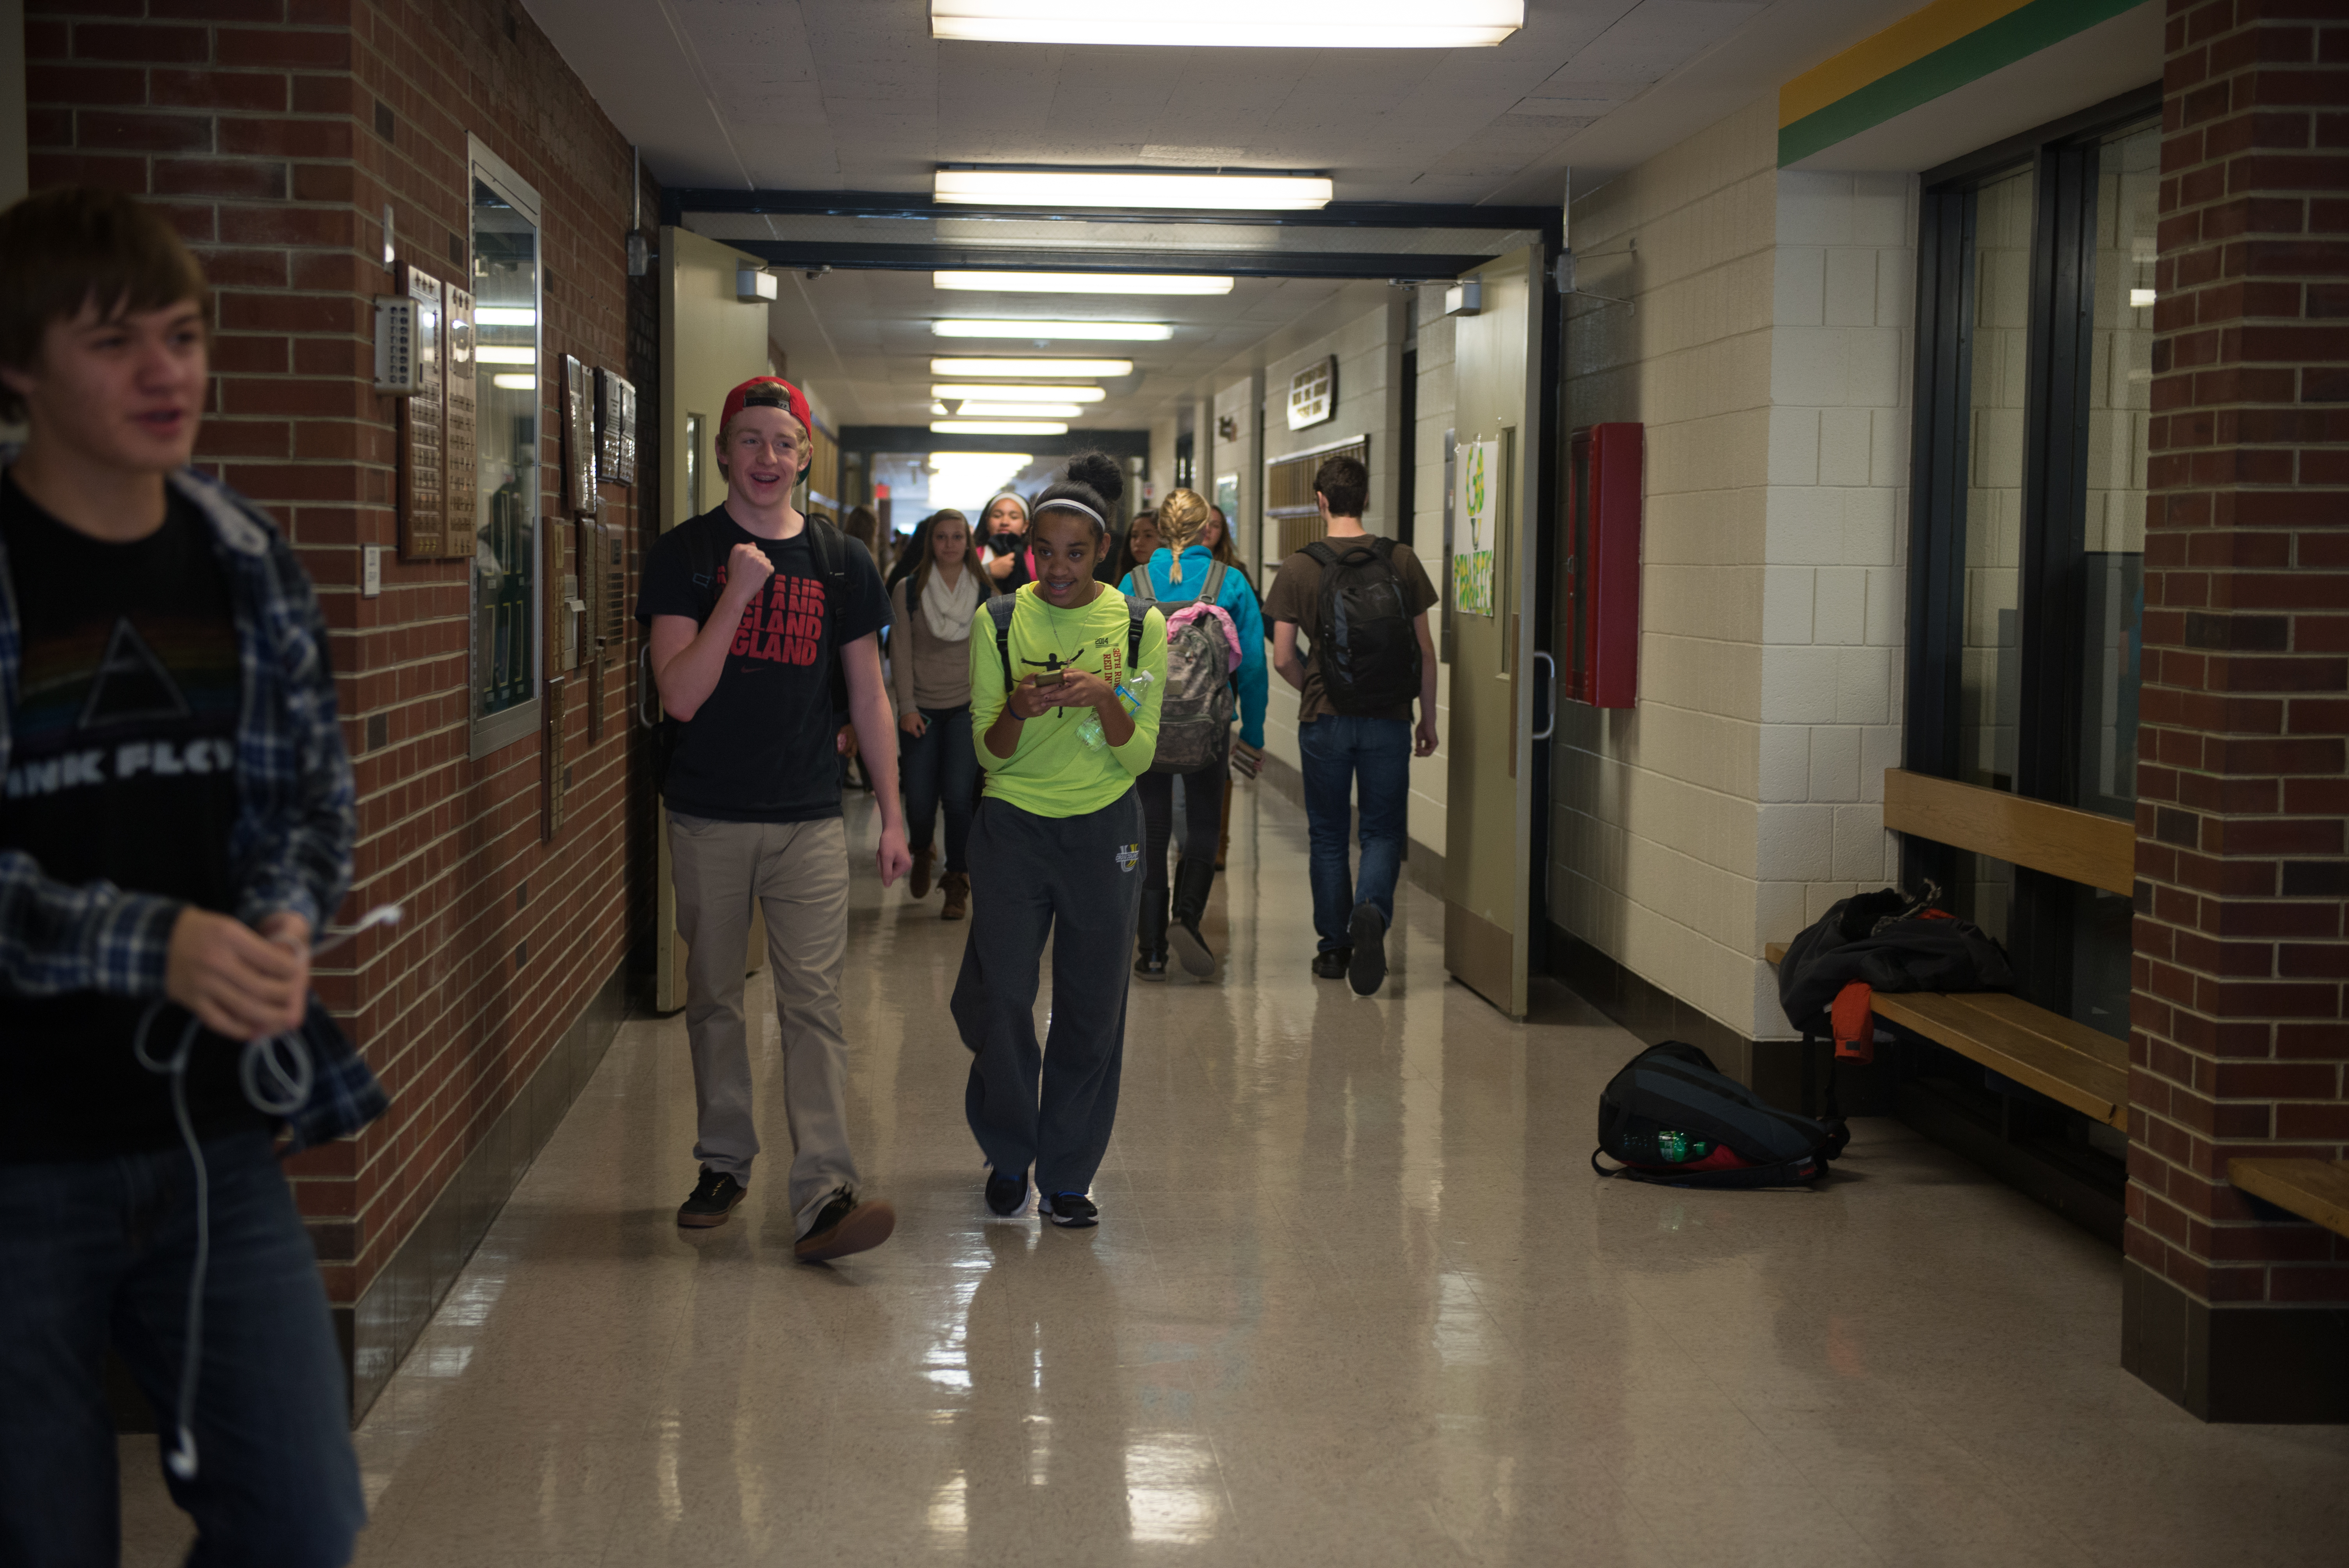 K-12 Education students in a school hallway